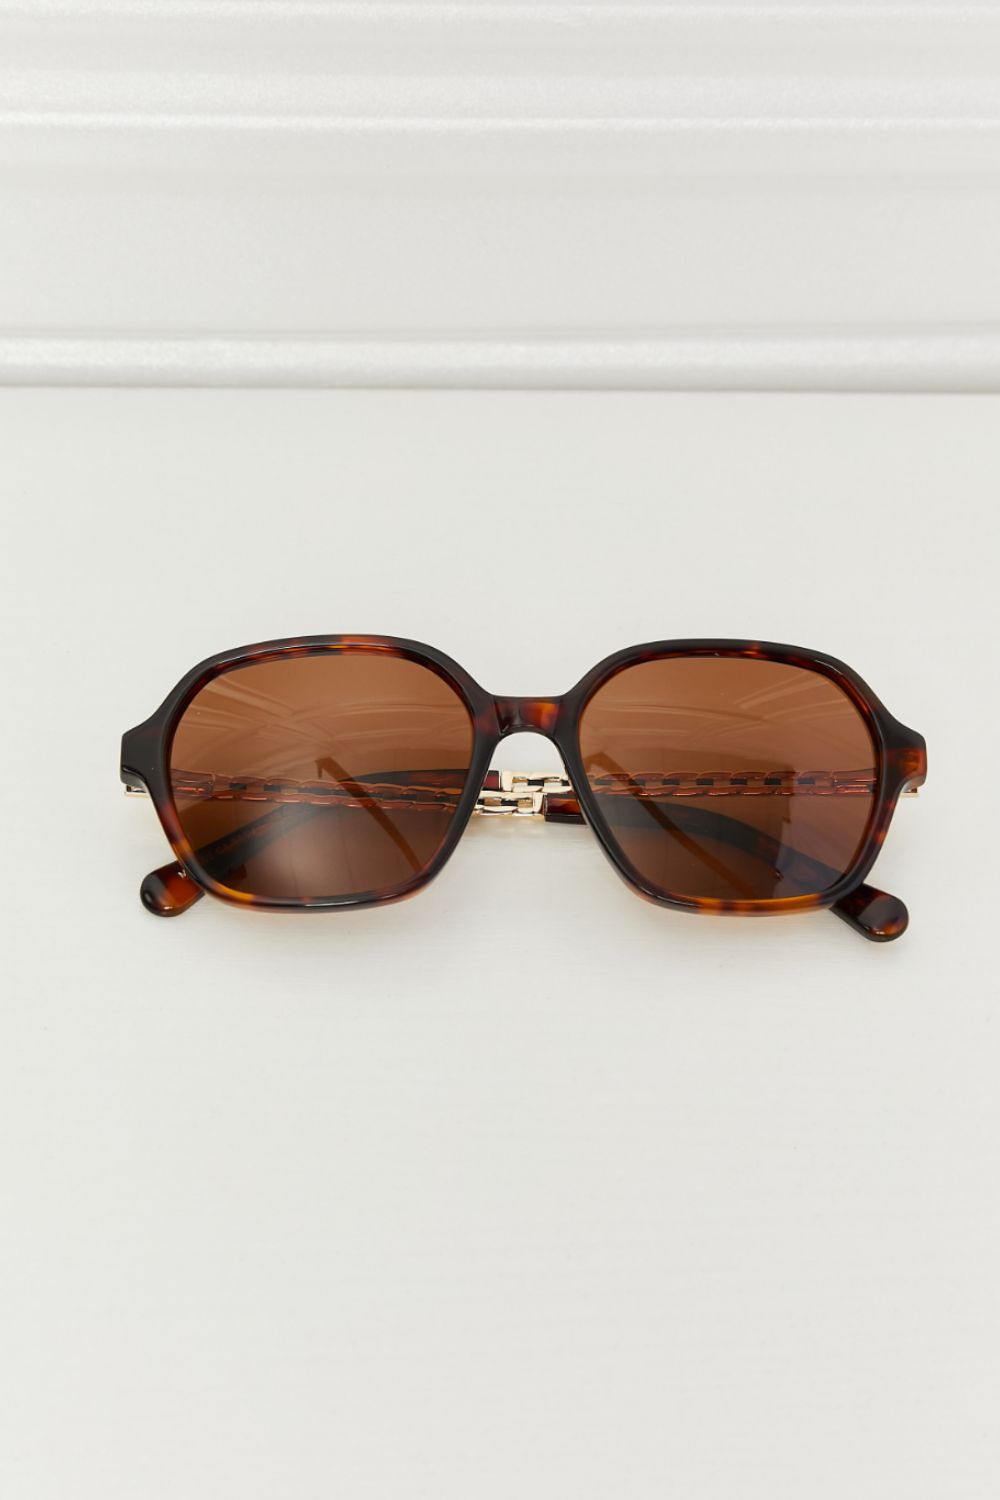 TAC Polarization Lens Full Rim Sunglasses Chestnut One Size Sunglasses by Vim&Vigor | Vim&Vigor Boutique